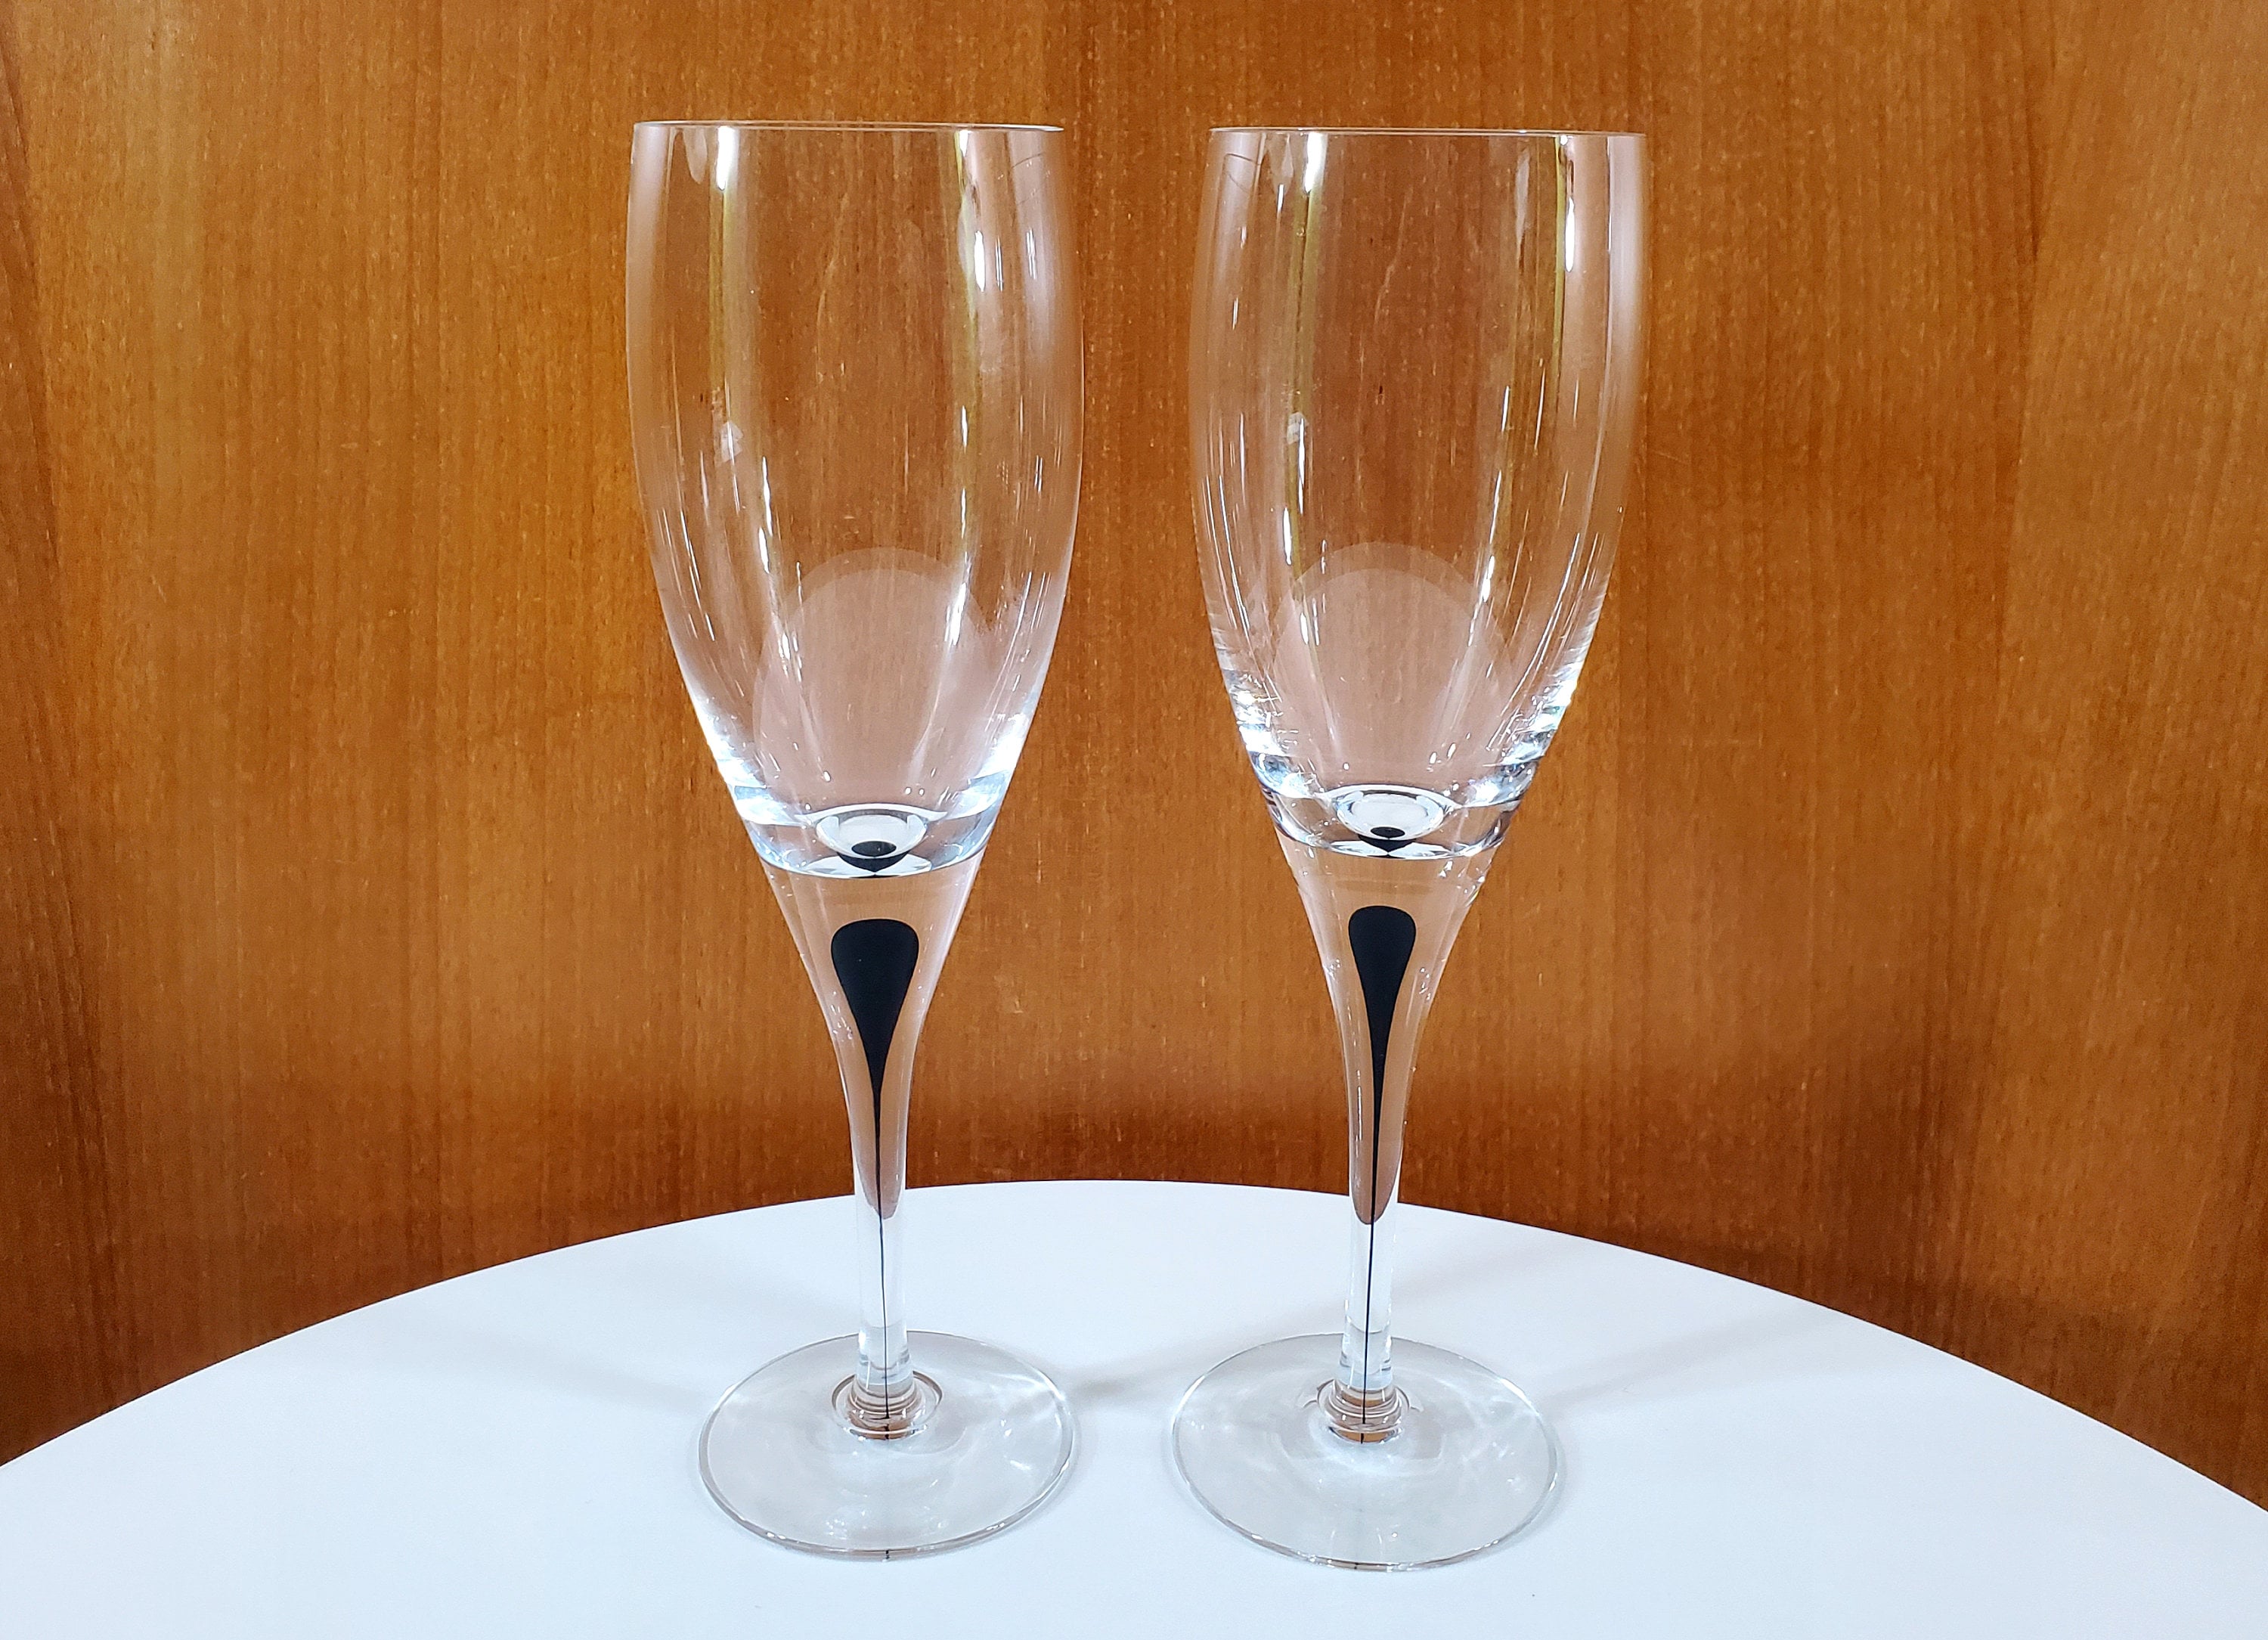 7 oz. Wine Glass - Standard or Short Stem - Item #W7 -   Custom Printed Promotional Products